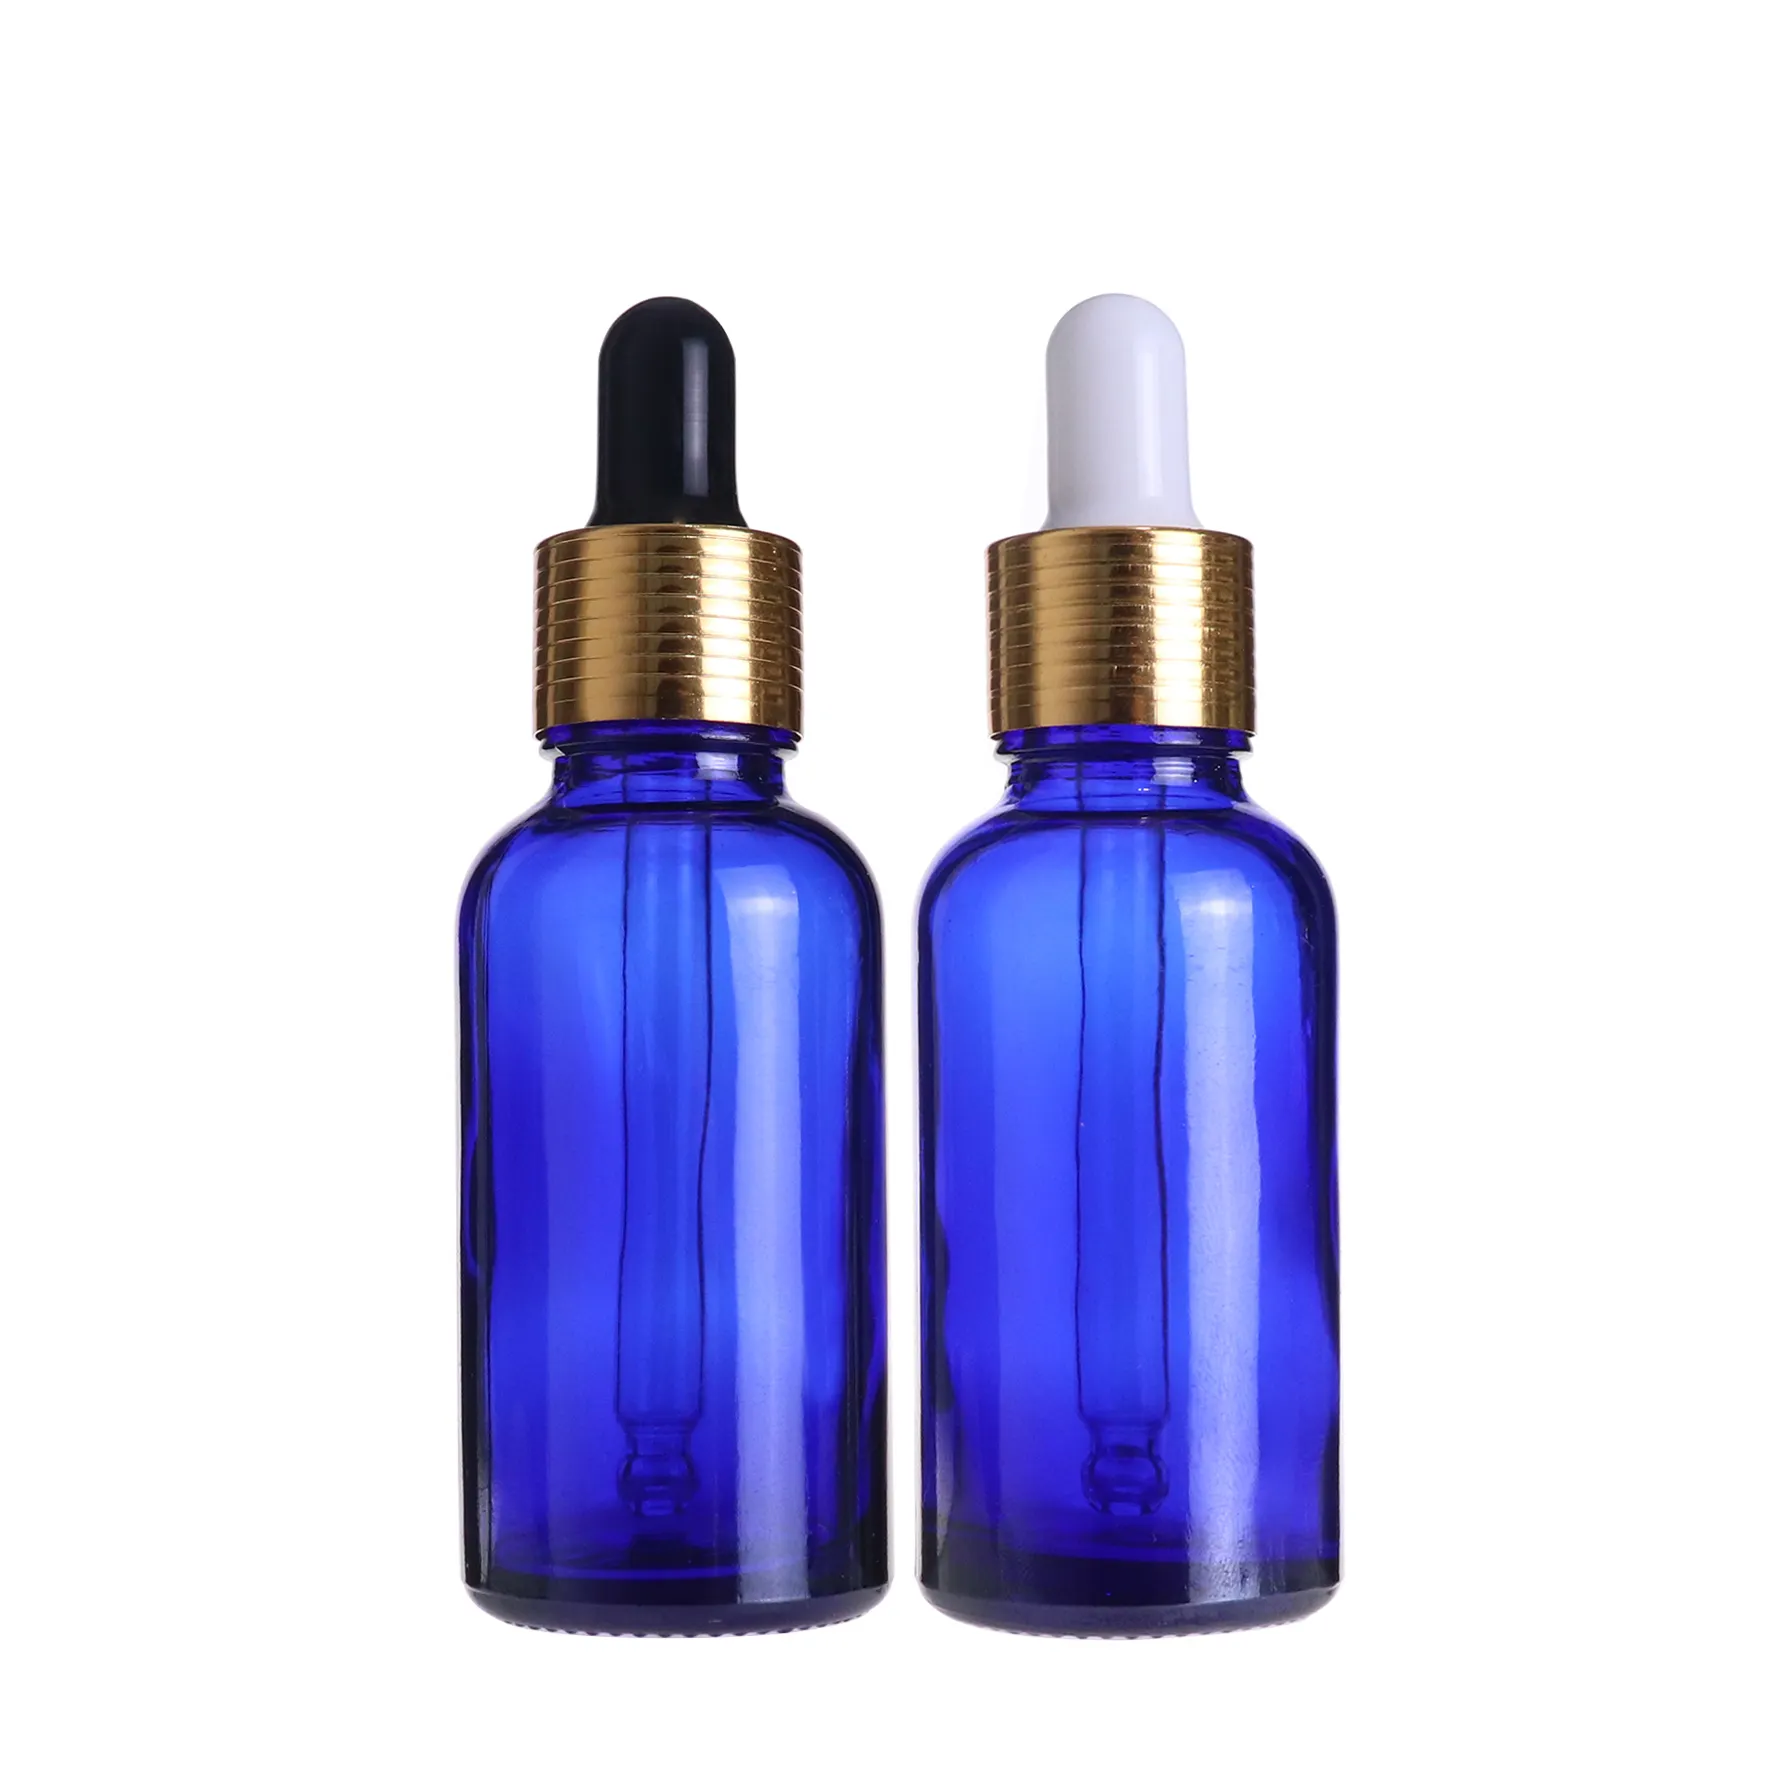 High quality essential oil transparent coblat blue glass 1oz dropper bottle 30ml with gold dropper cap